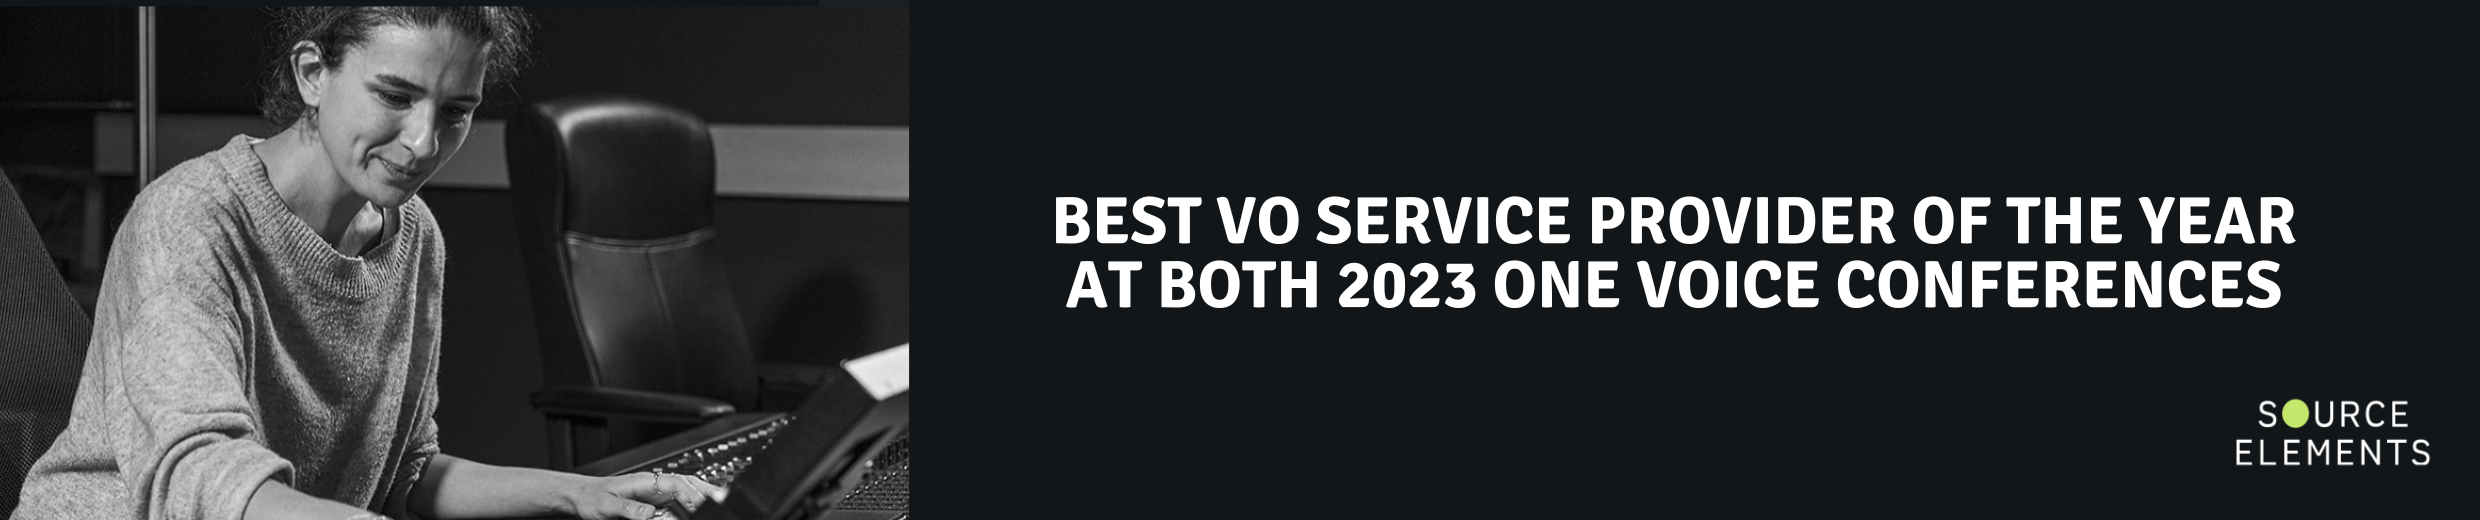 Best VO Service Provider 2023